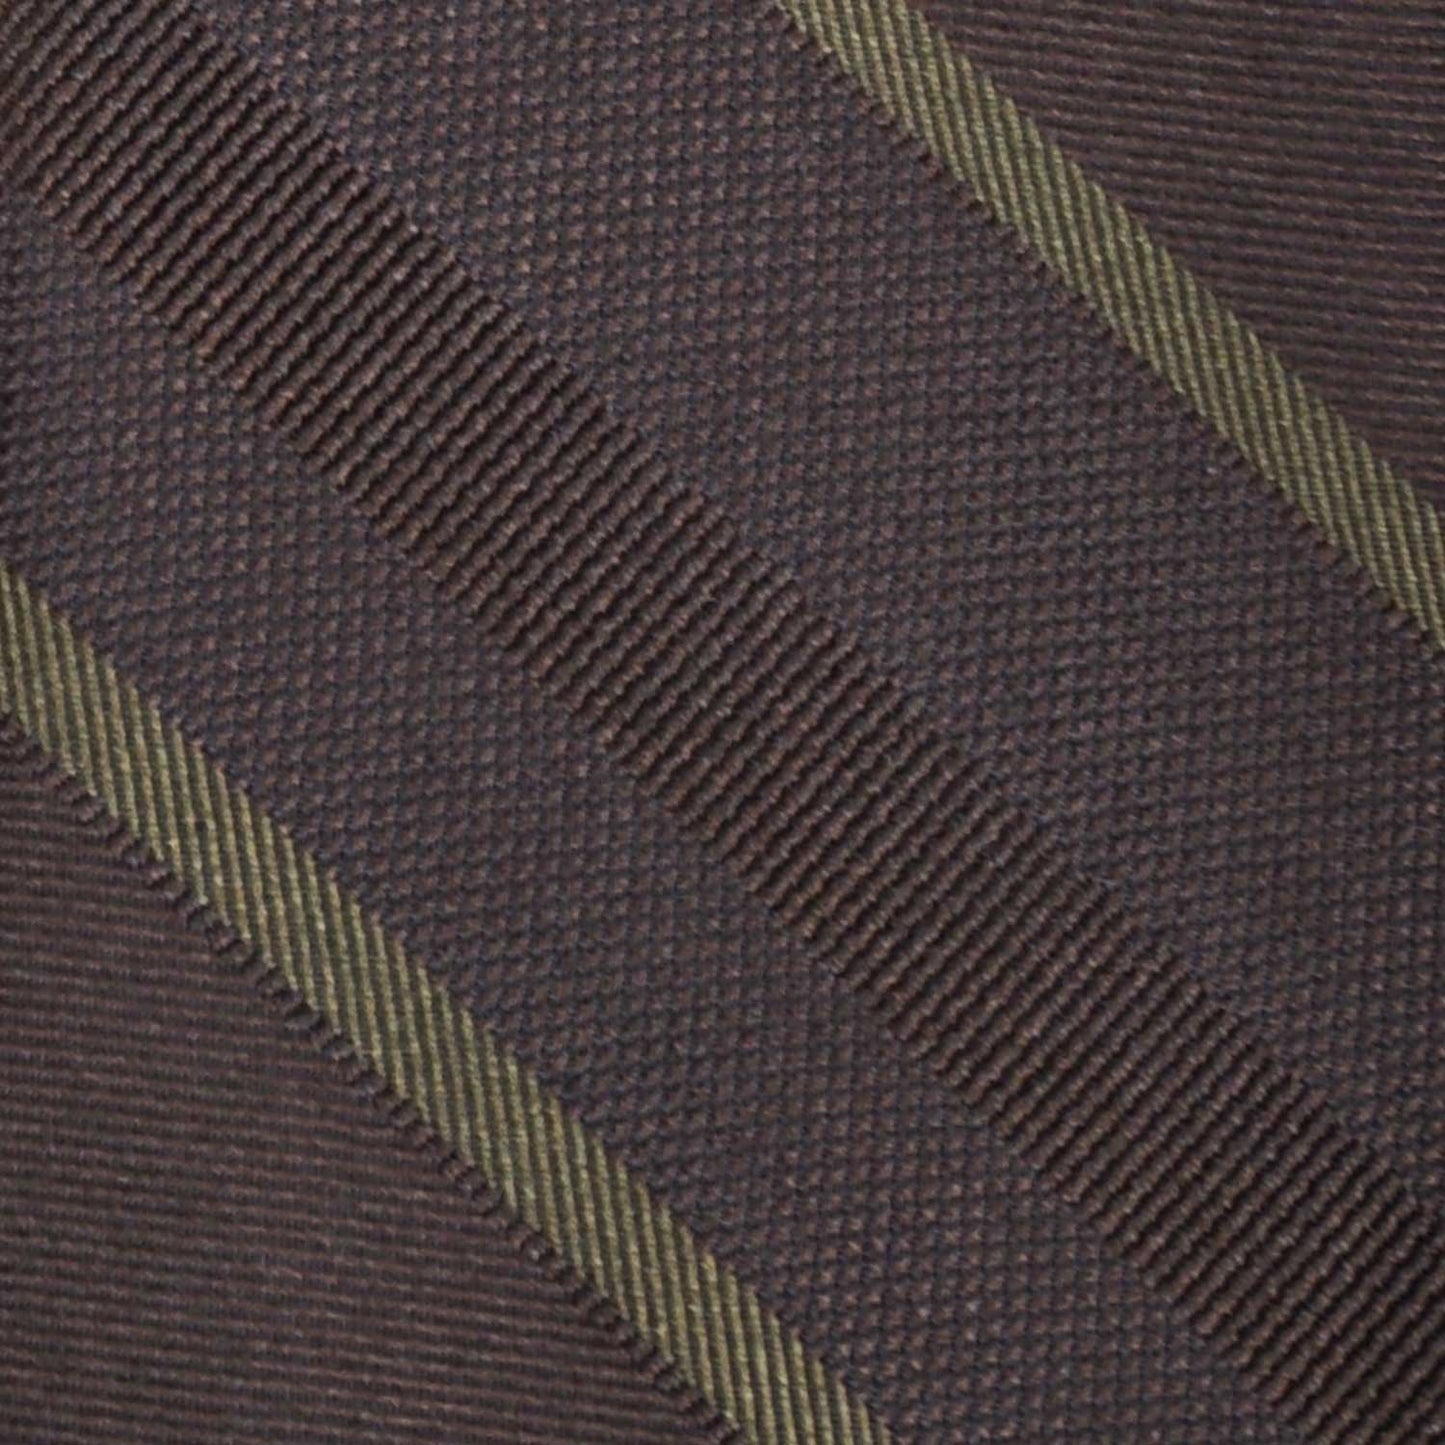 Wengè Brown Regimental Silk Tie. Elegant striped silk necktie, refined wengè brown background with army green striped